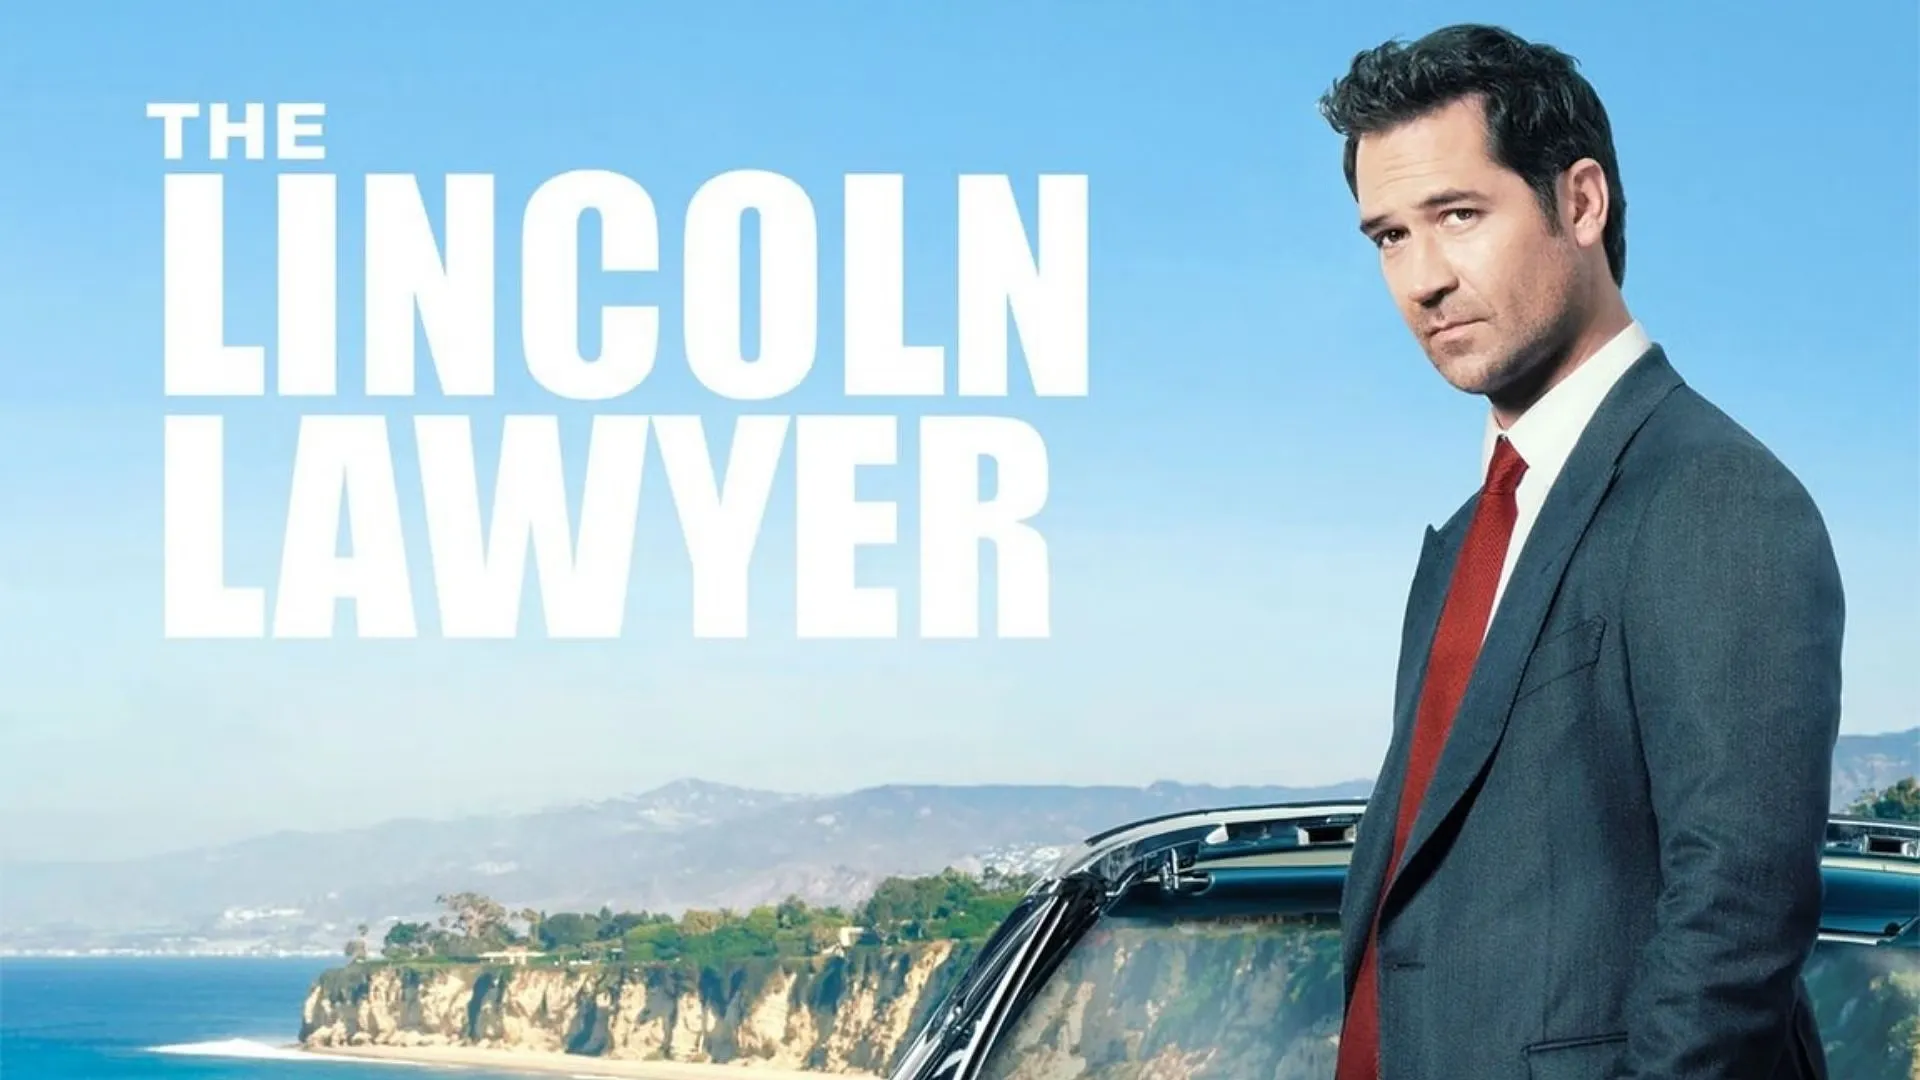 “The Lincoln Lawyer” Season 2